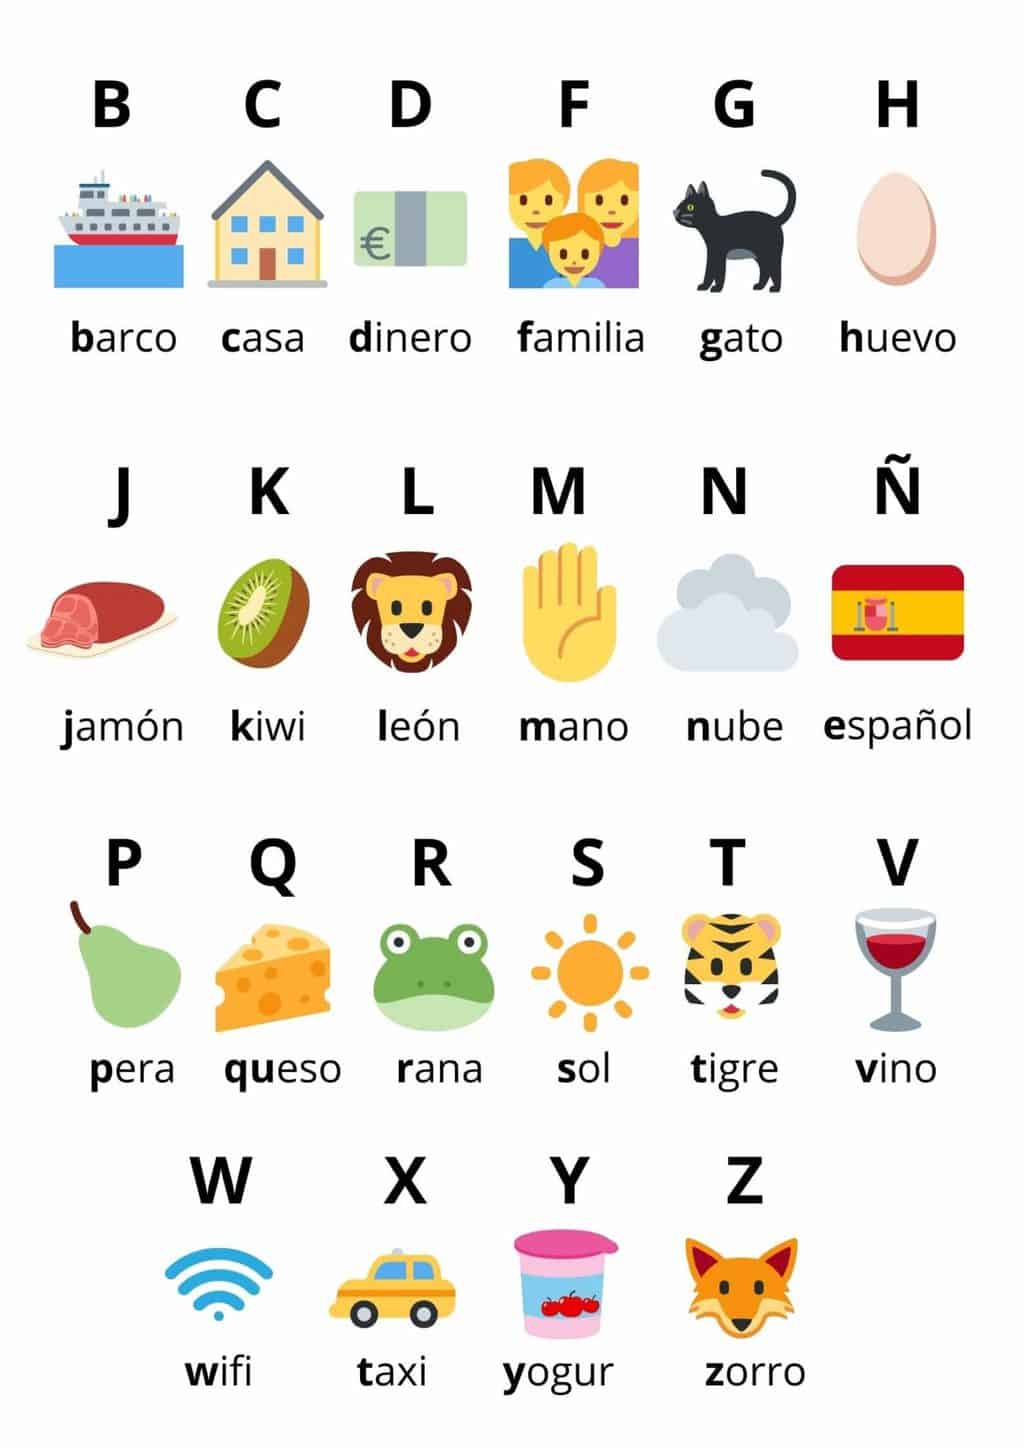 The Spanish Alphabet - Spelling and Pronunciation